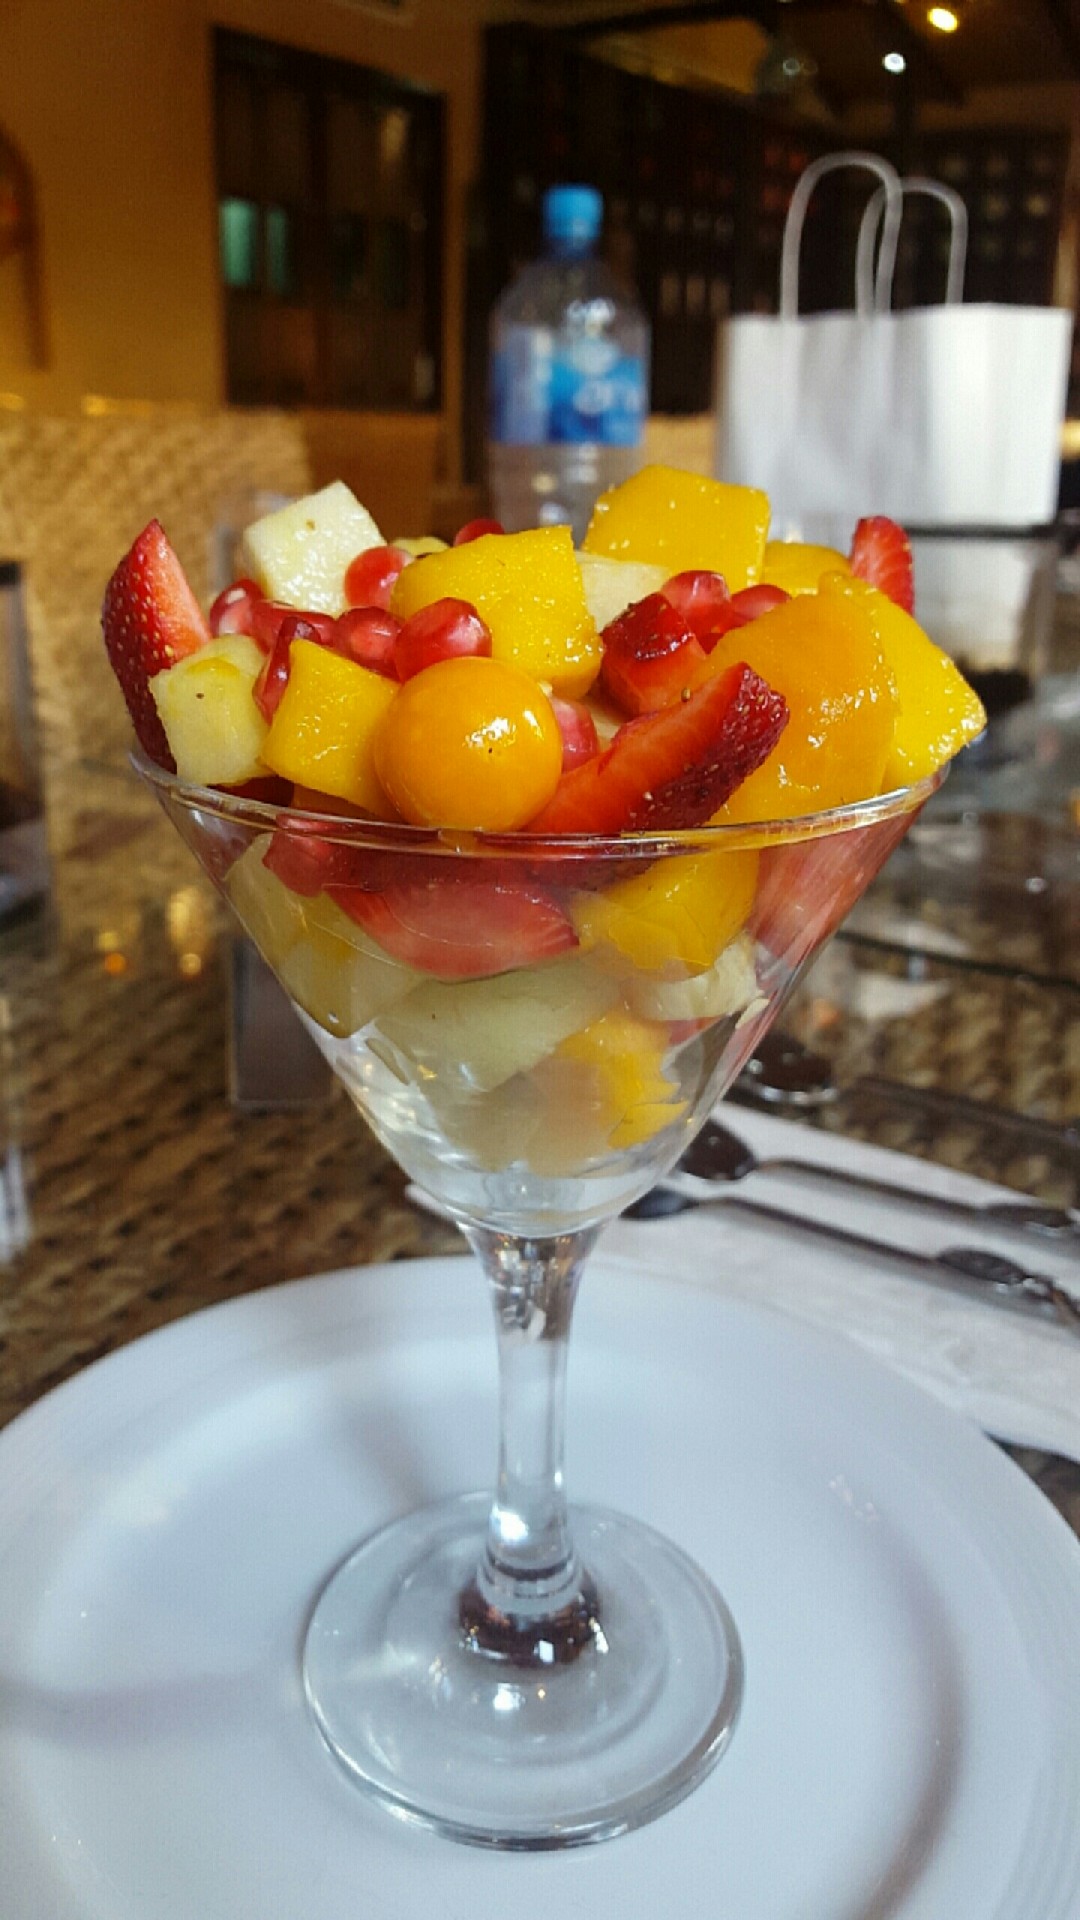 Fresh fruit salad😎 @ مطعم ومقهى بيشن - البحرين